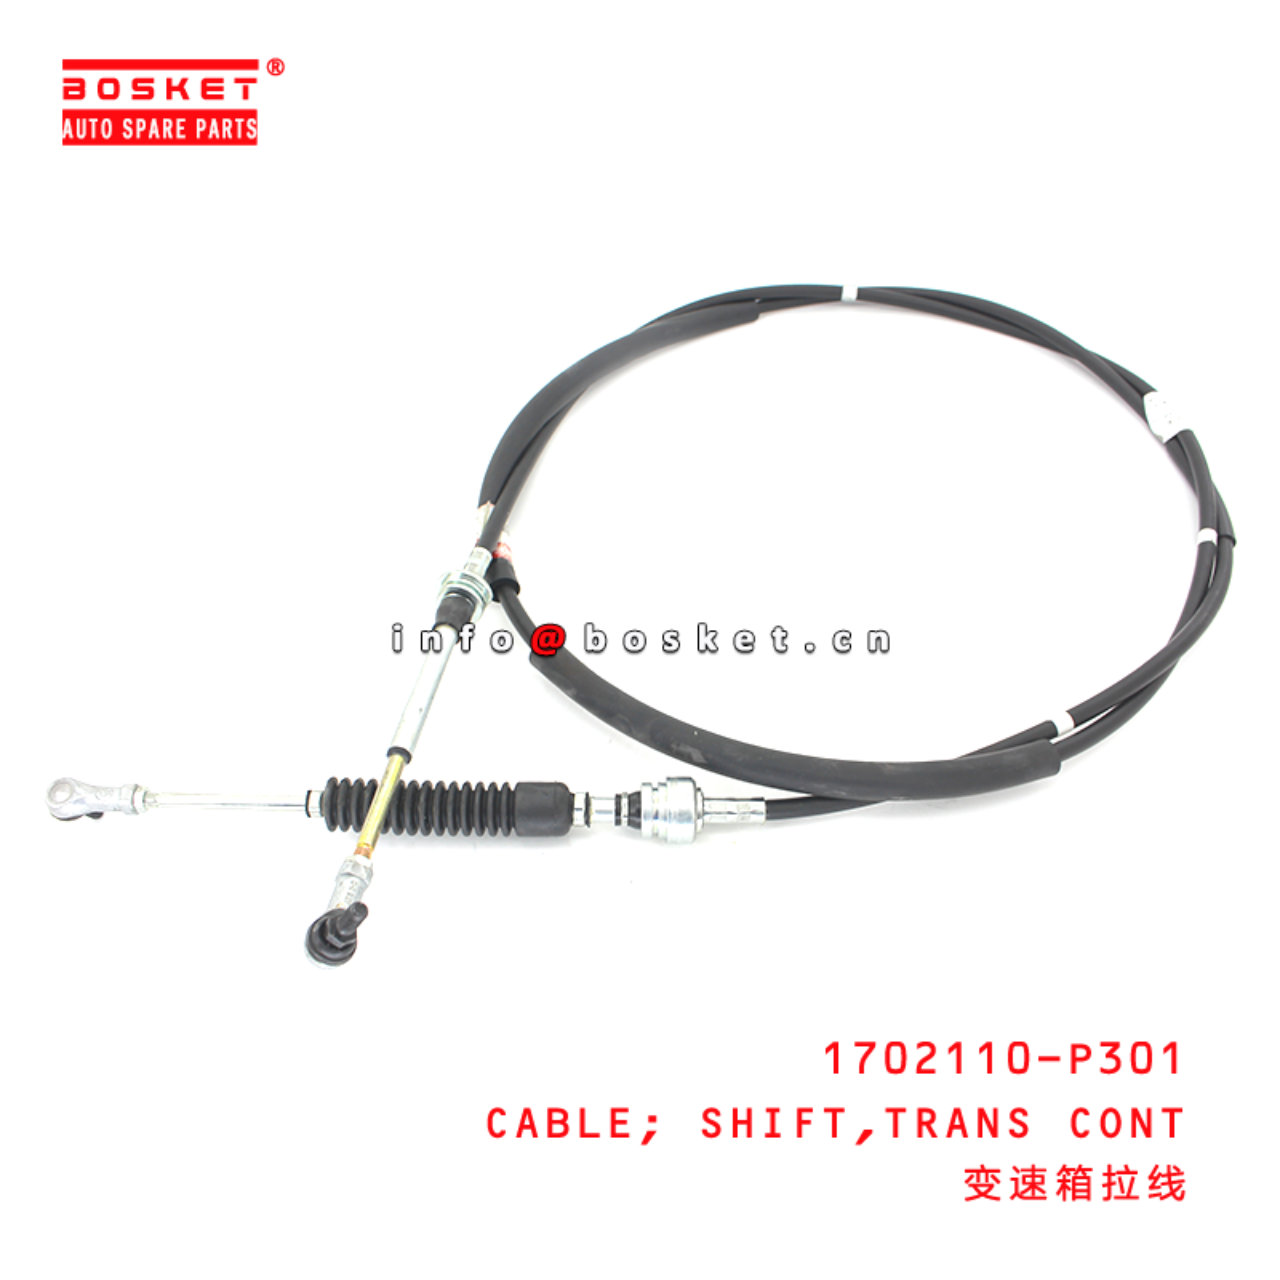 1702110-P301 Transmission Control Shift Cable suitable for ISUZU 700P 1702110-P301